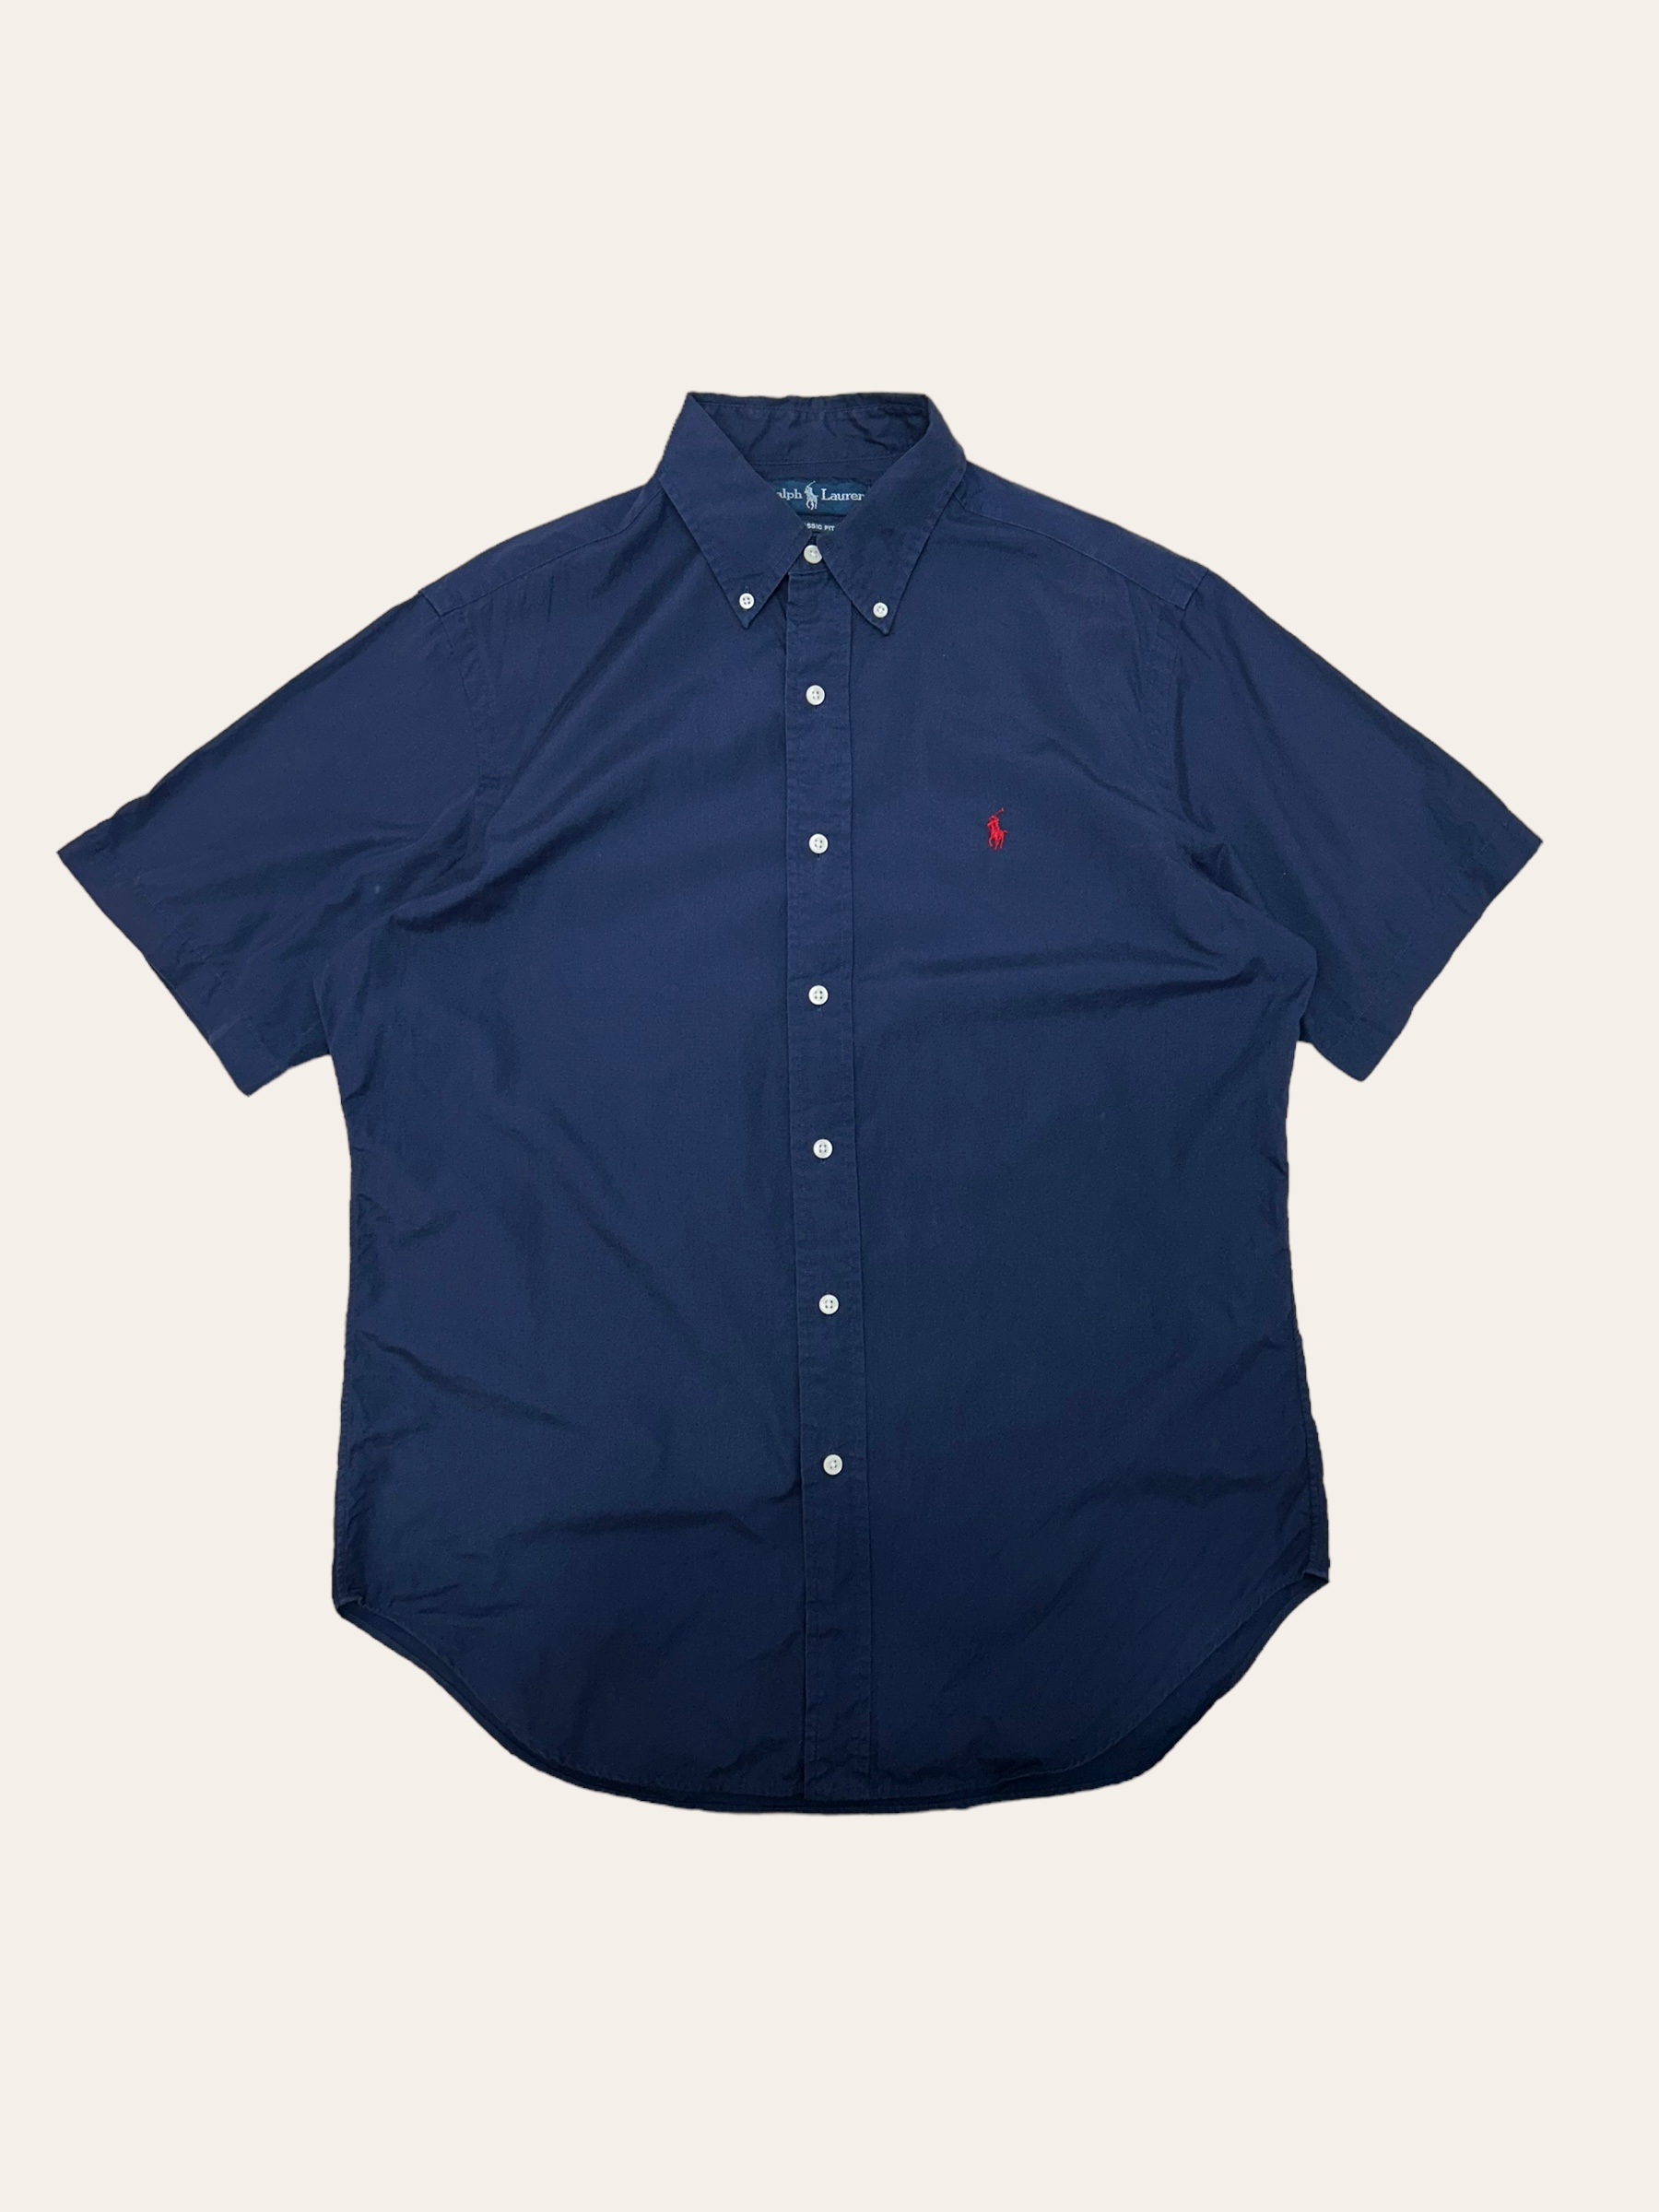 (From USA)Polo ralph lauren navy solid short sleeve shirt M